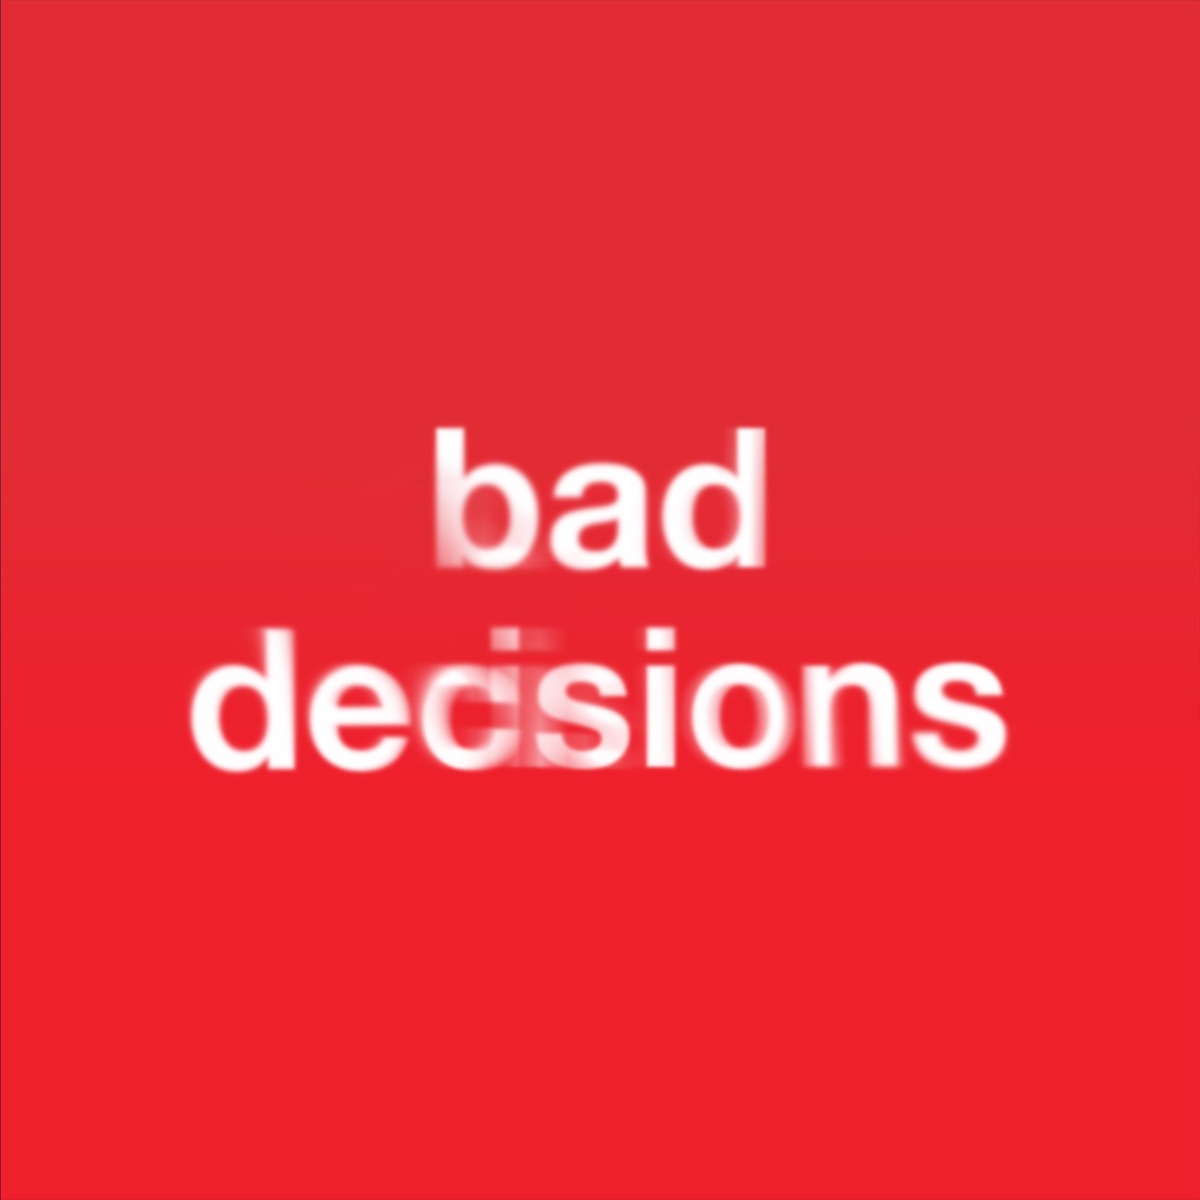 『benny blanco, BTS & Snoop Dogg - Bad Decisions 歌詞』収録の『Bad Decisions』ジャケット